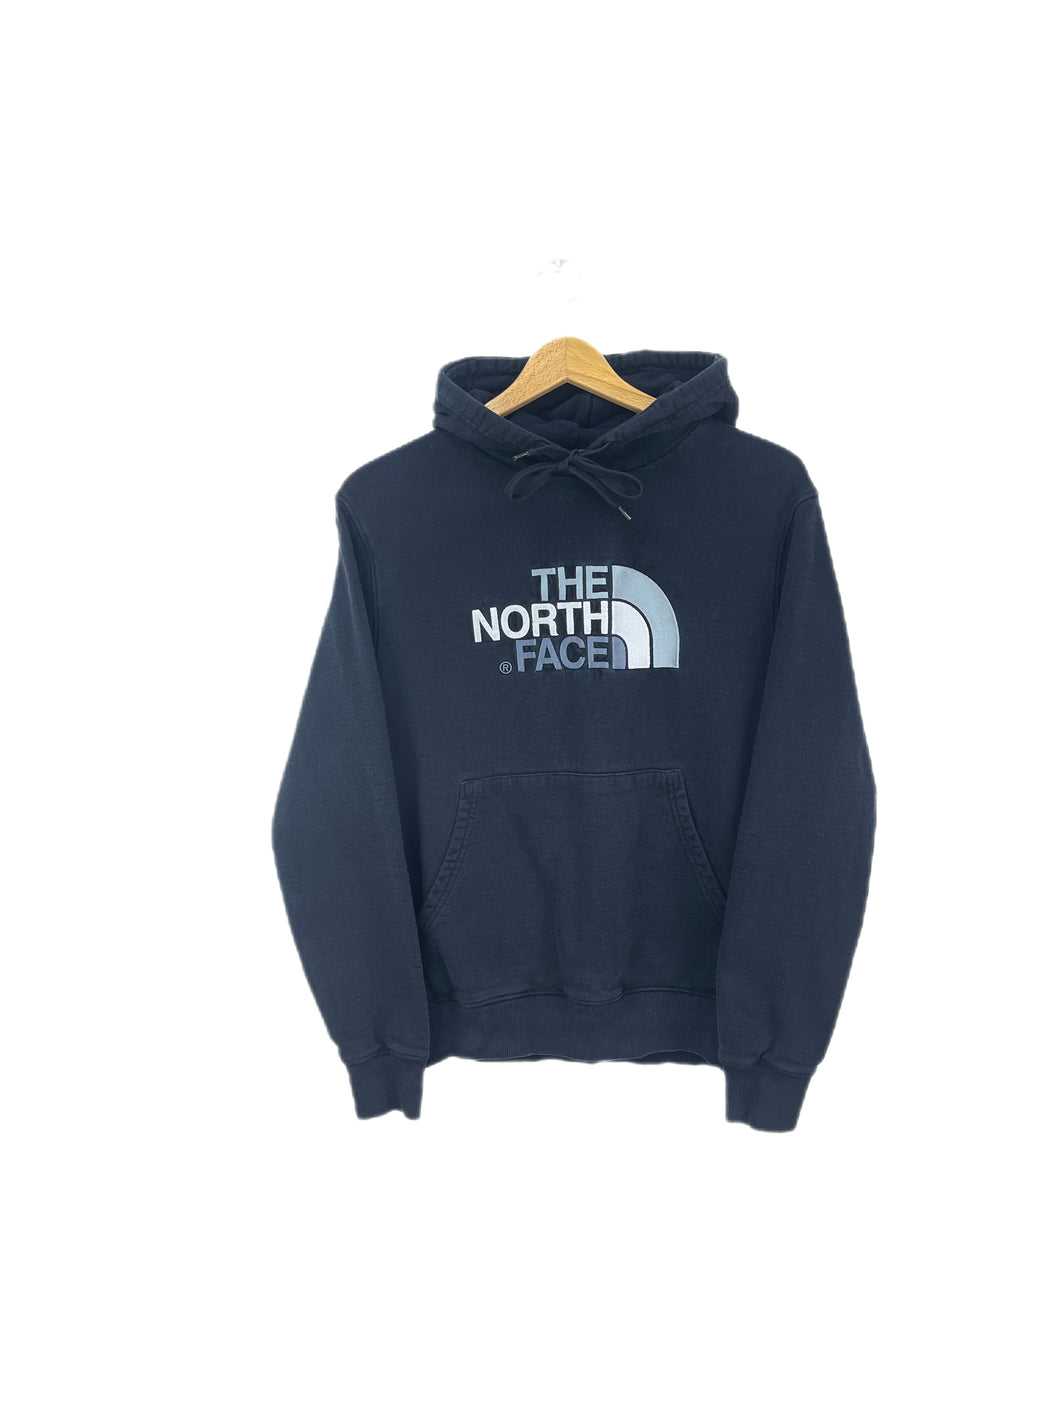 TNF Sweatshirt - Small